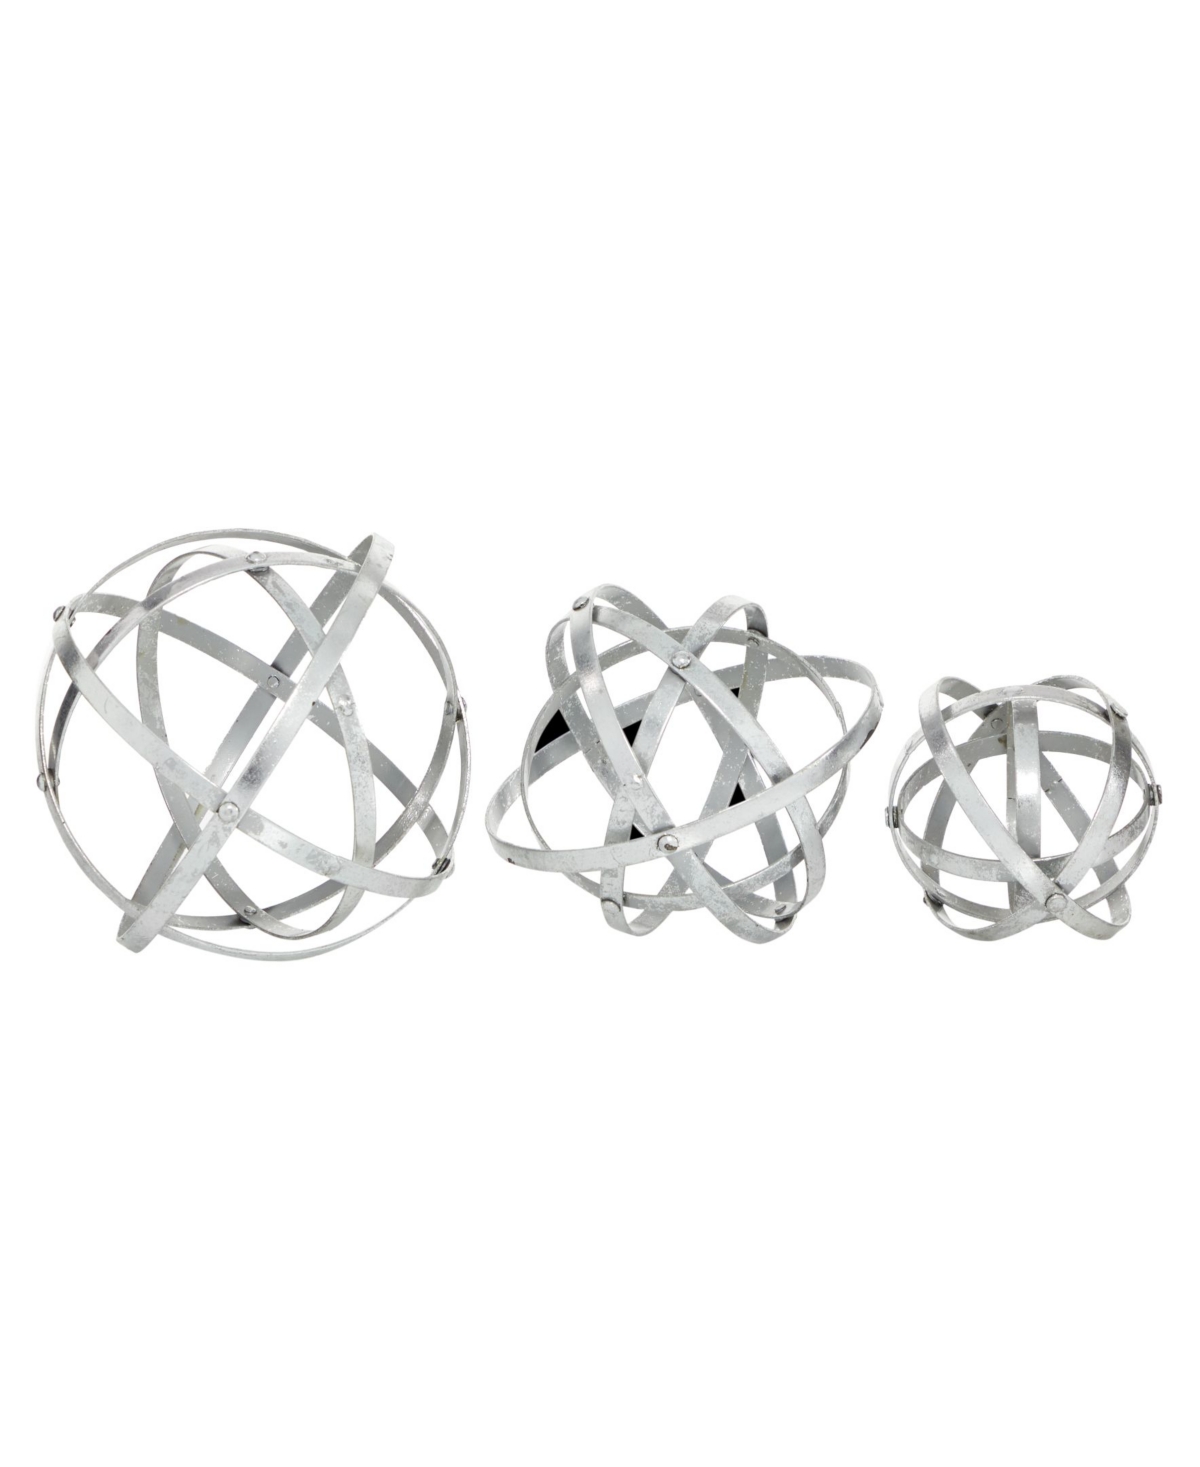 Rosemary Lane Metal Modern Orbs Balls Sculpture, Set Of 3 In Silver-tone